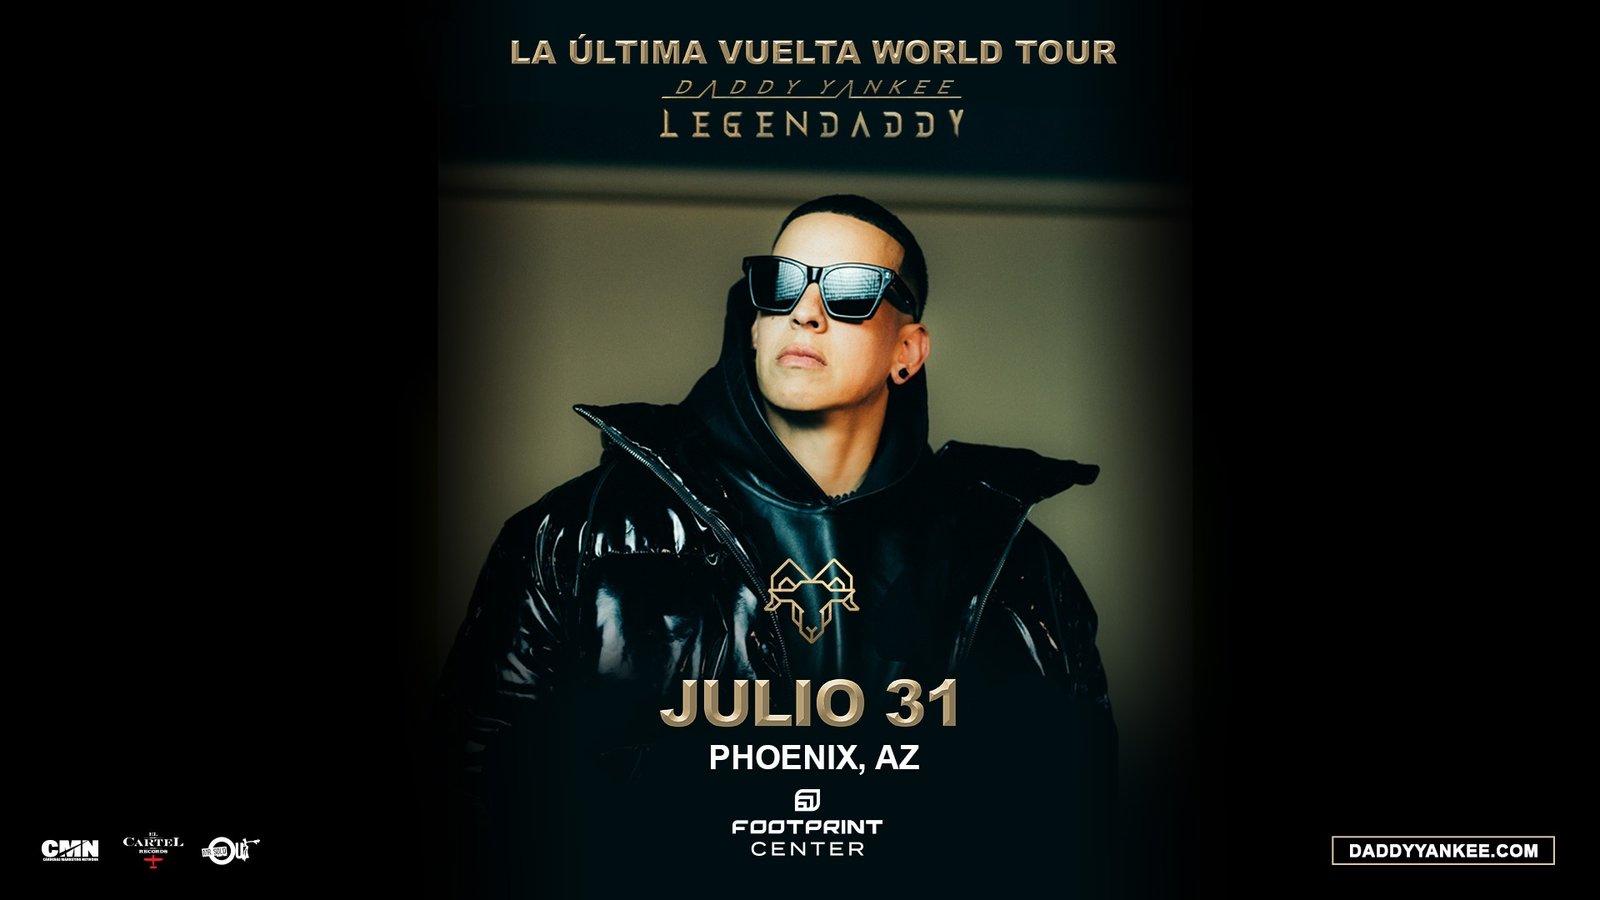 Daddy Yankee LA ÚLTIMA VUELTA WORLD TOUR Atlas Artist Group